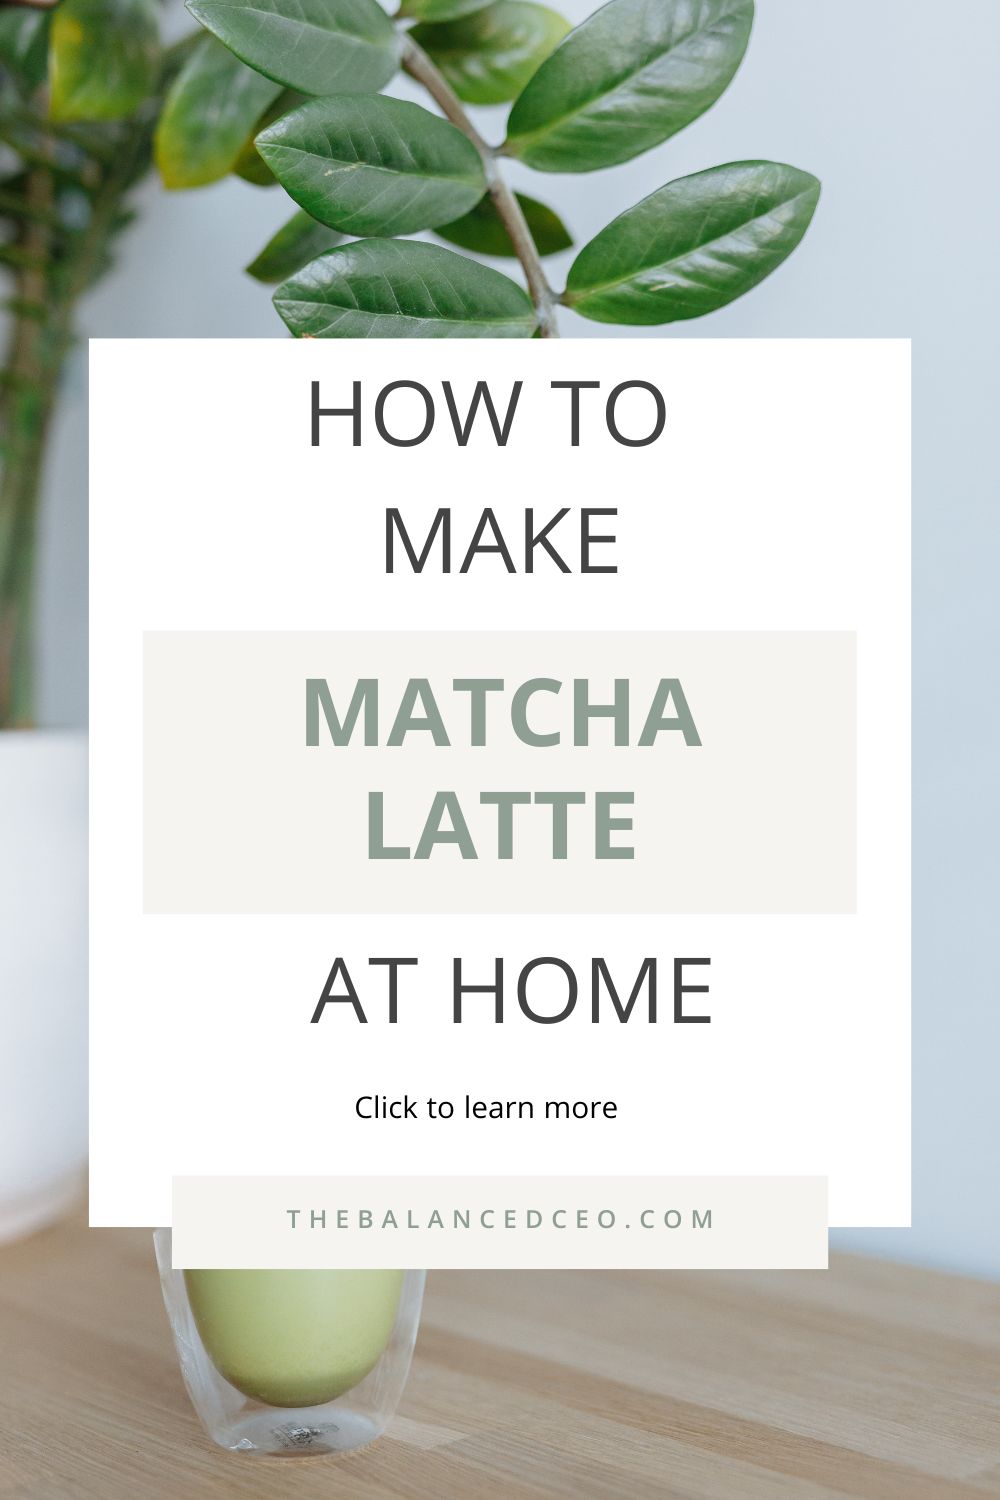 How to Make Matcha Latte at Home